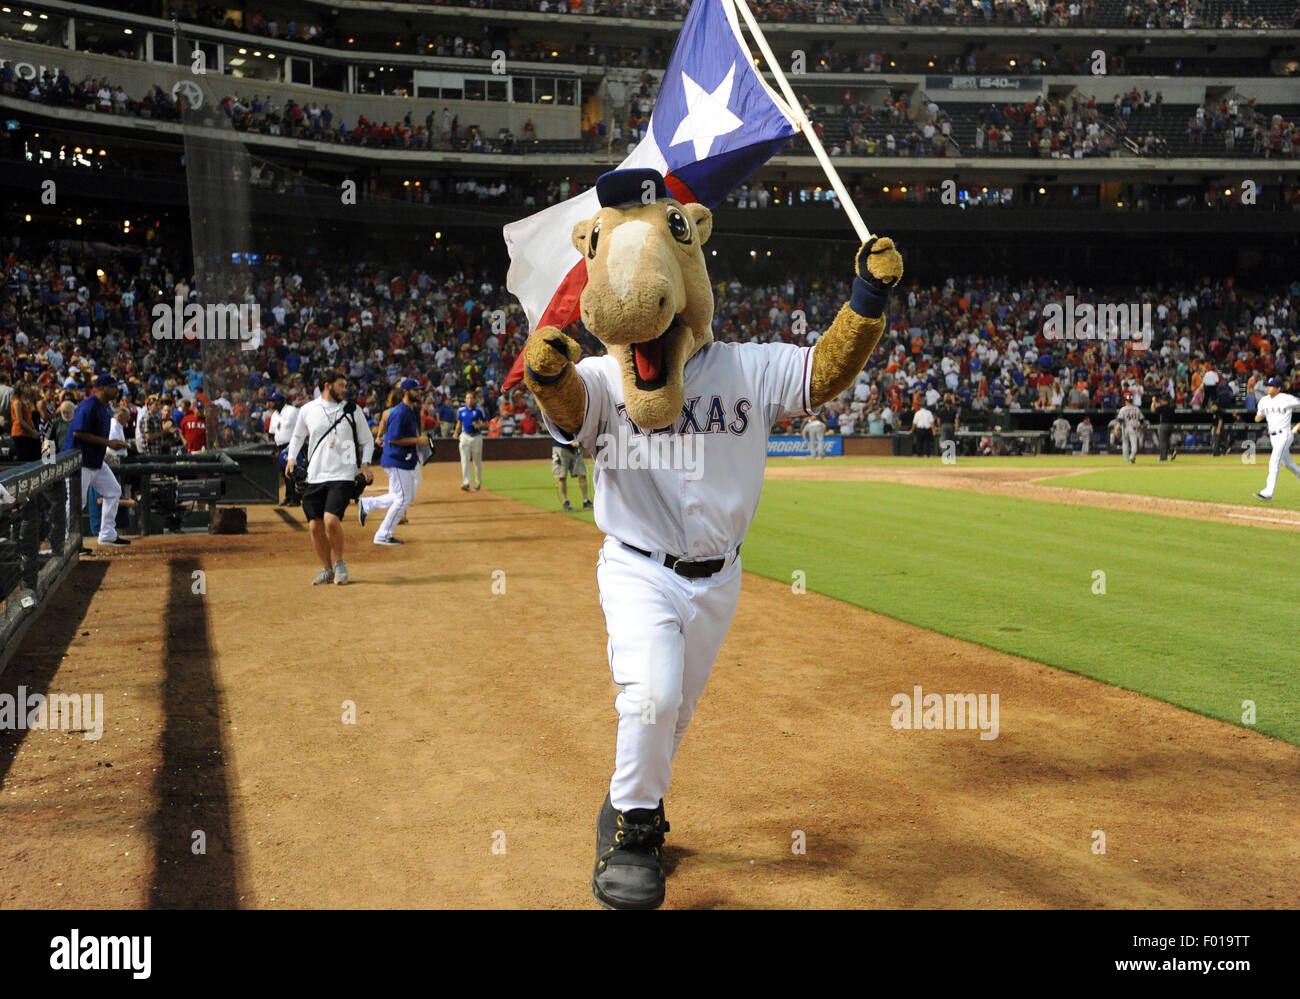 AUG 04, 2015: Texas Rangers mascot Captain celebrates a win after